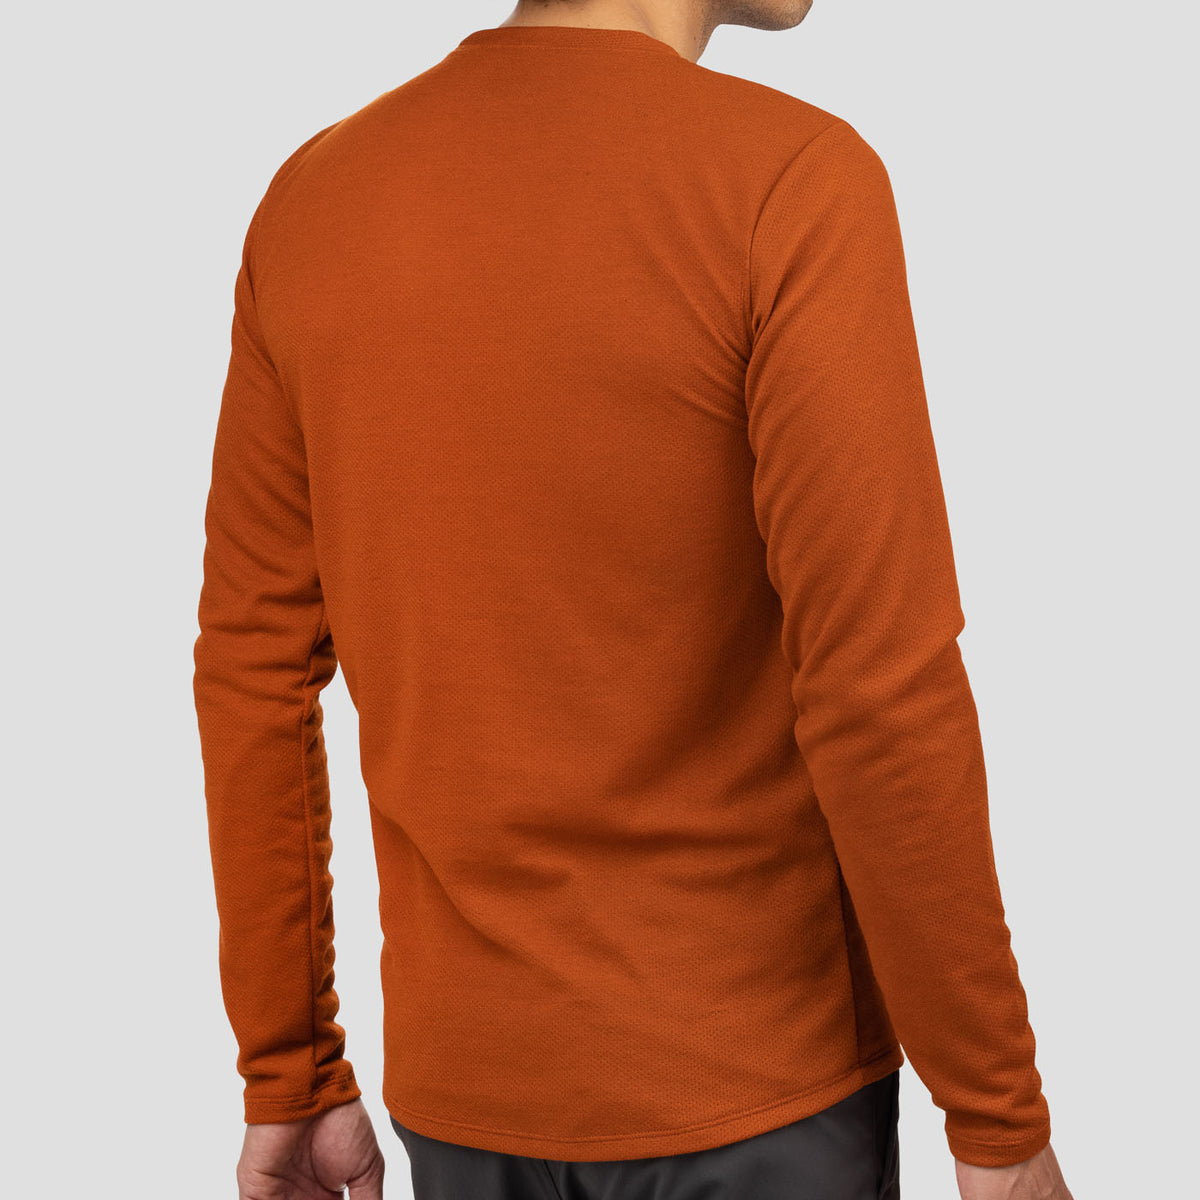 Shirts and Sweatshirts - Ornot Online Store